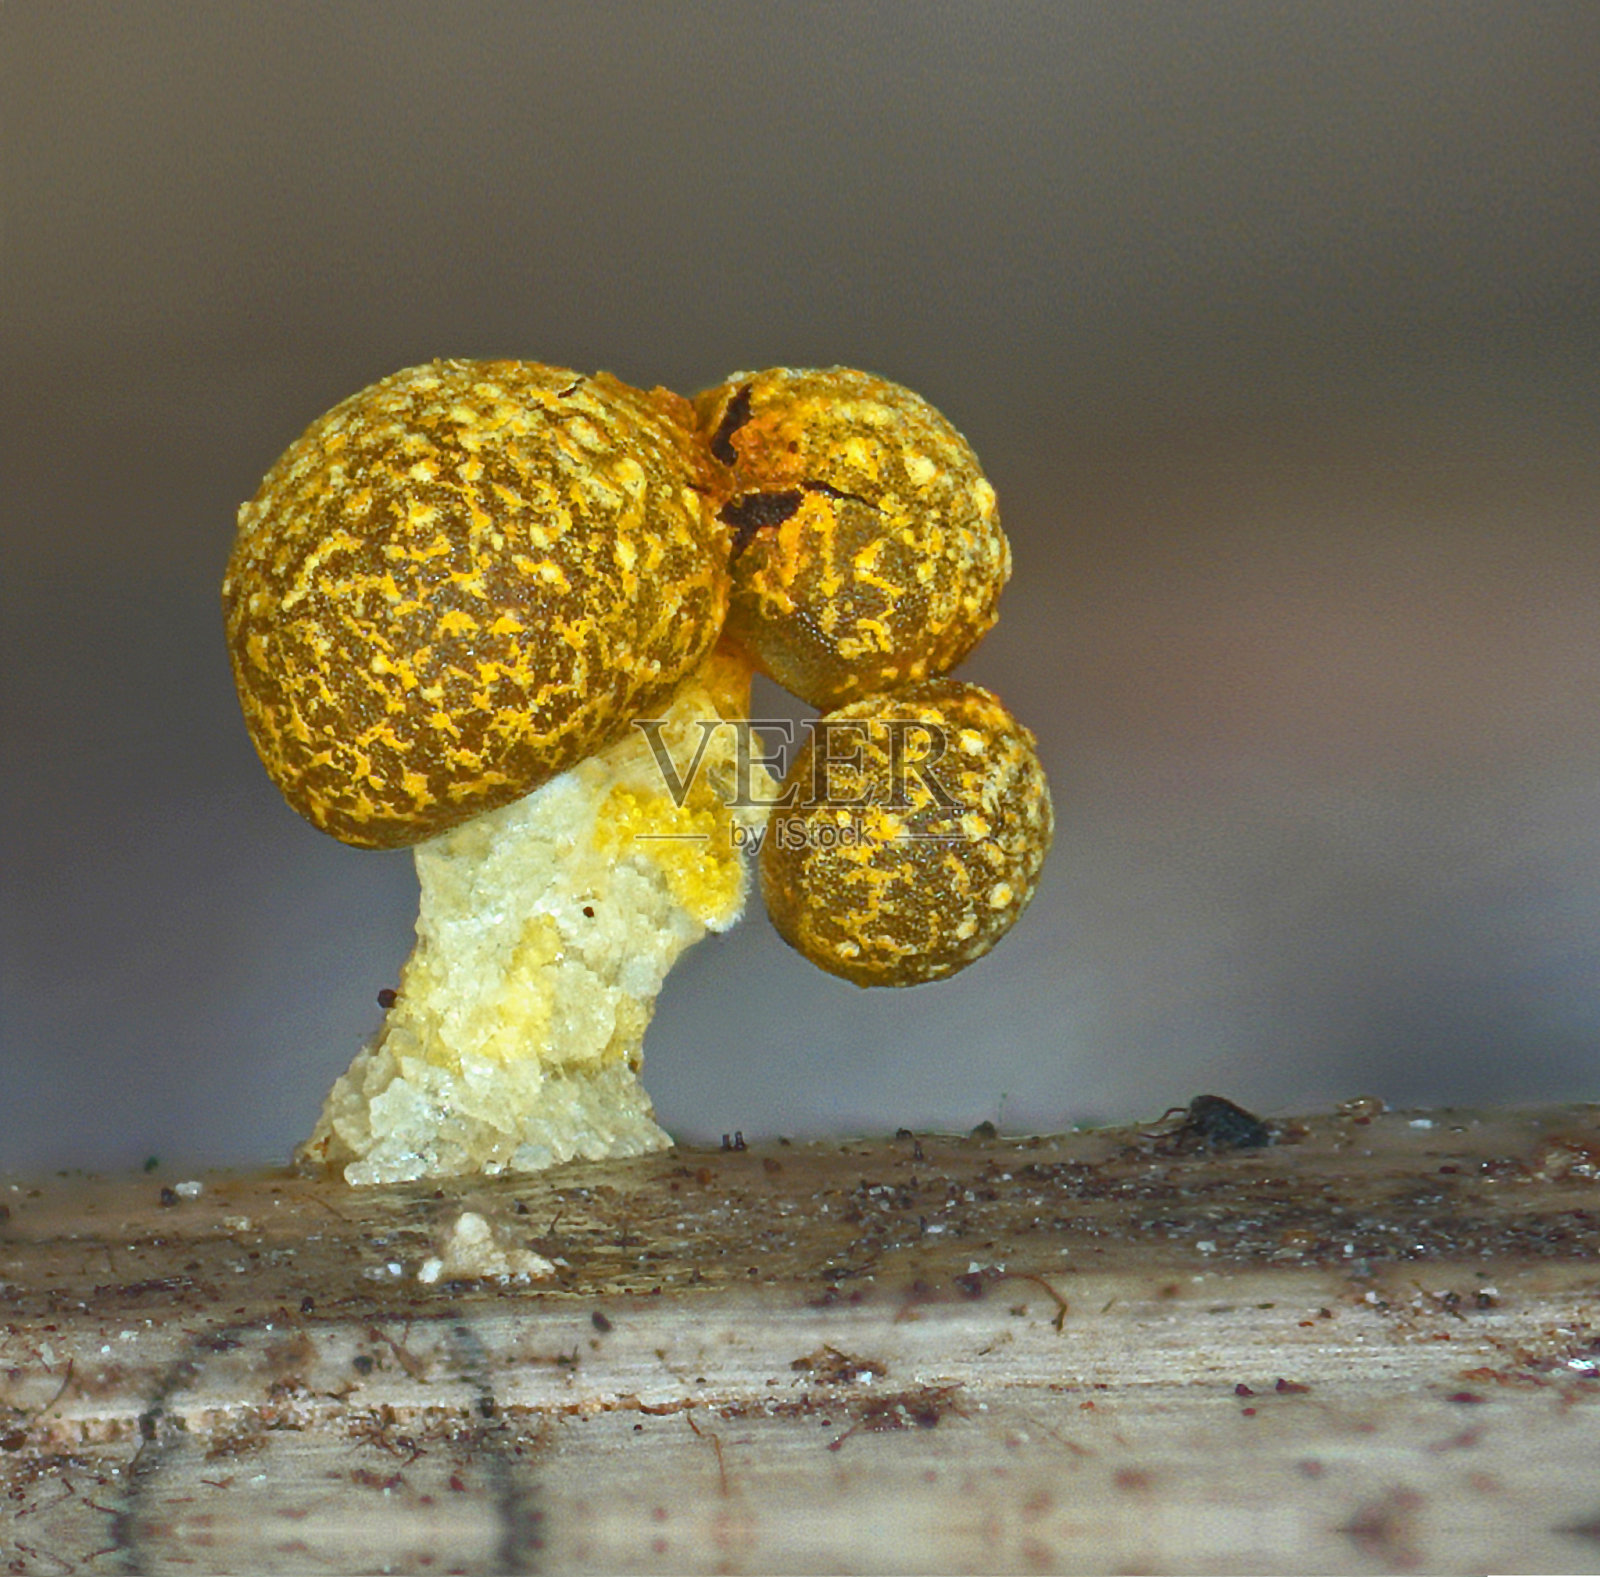 A fruit body of a slime mold Physarum polycephalum照片摄影图片